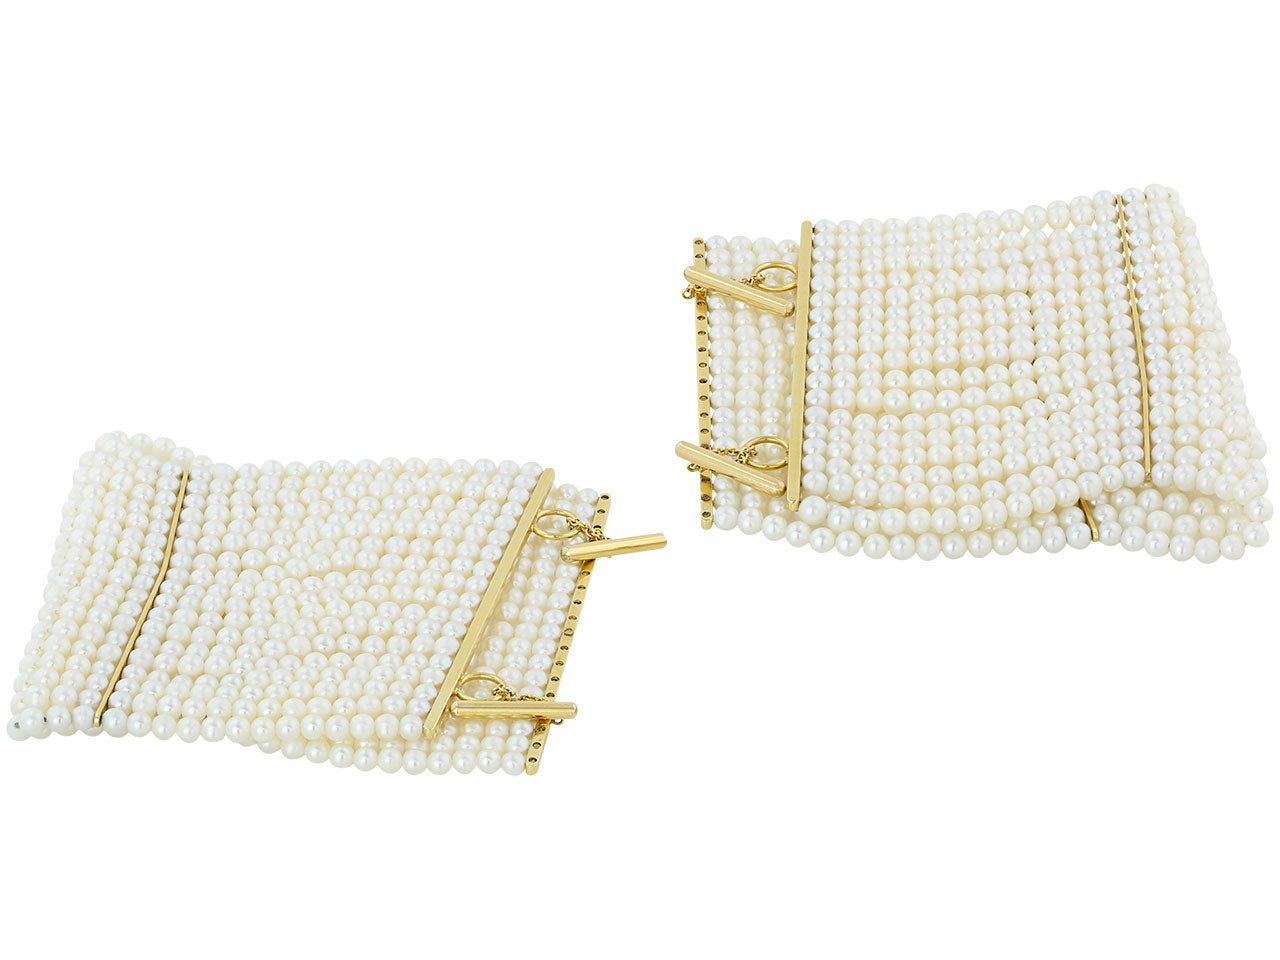 Pair of Wide Pearl Bracelets in 18K Gold